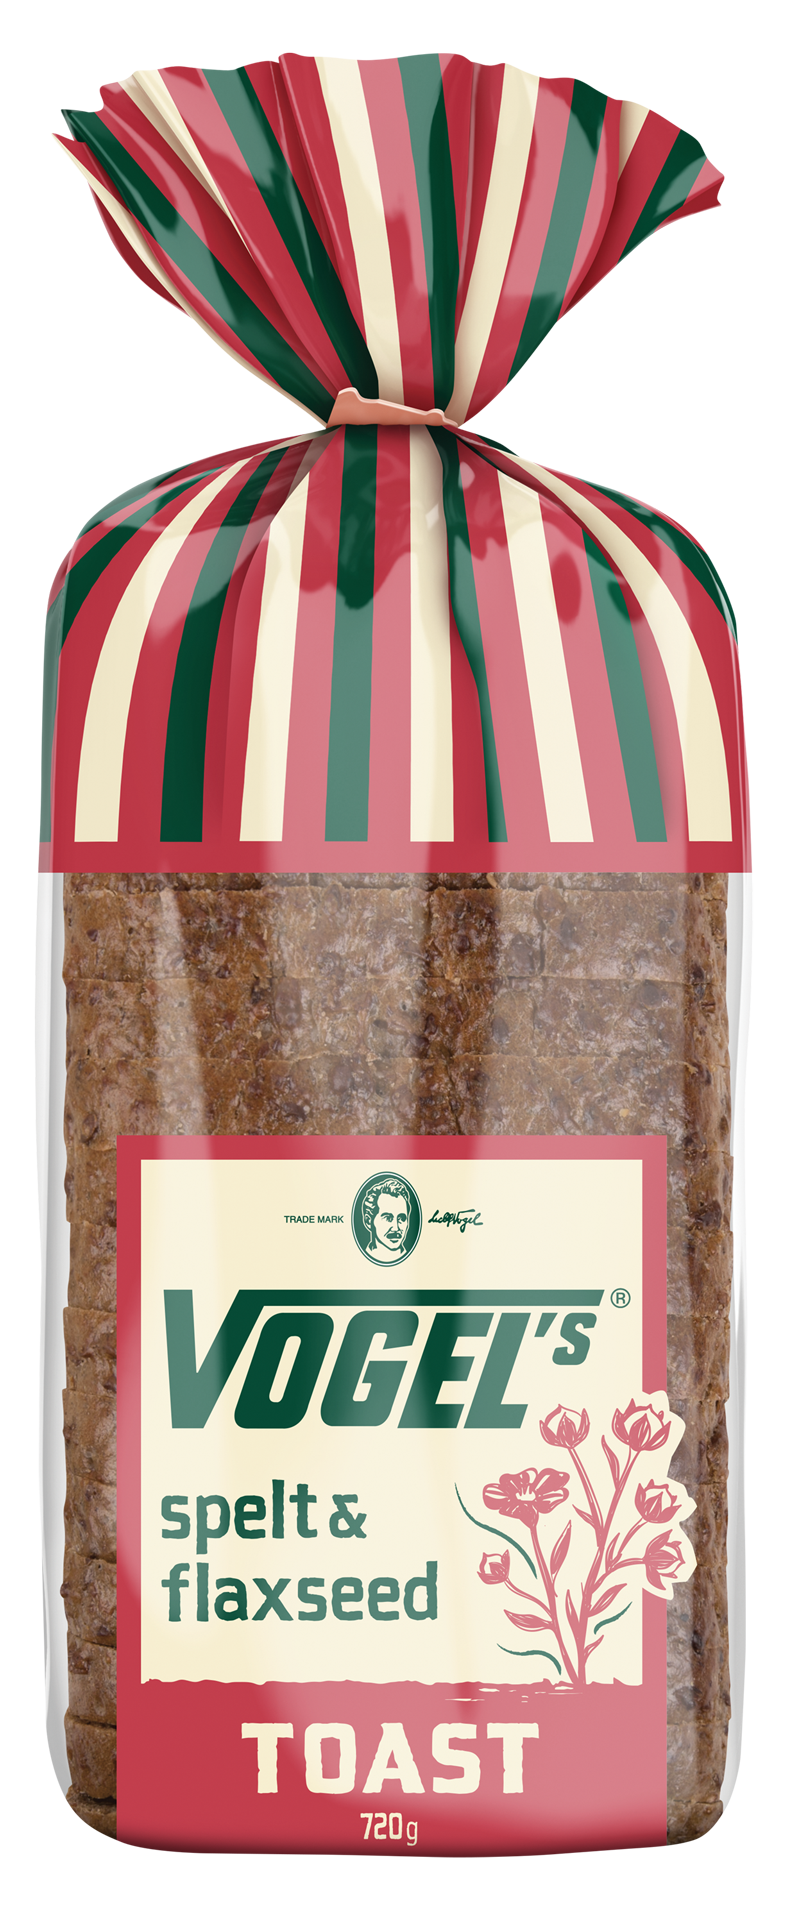 Vogel's Spelt and Flaxseed Toast Bread